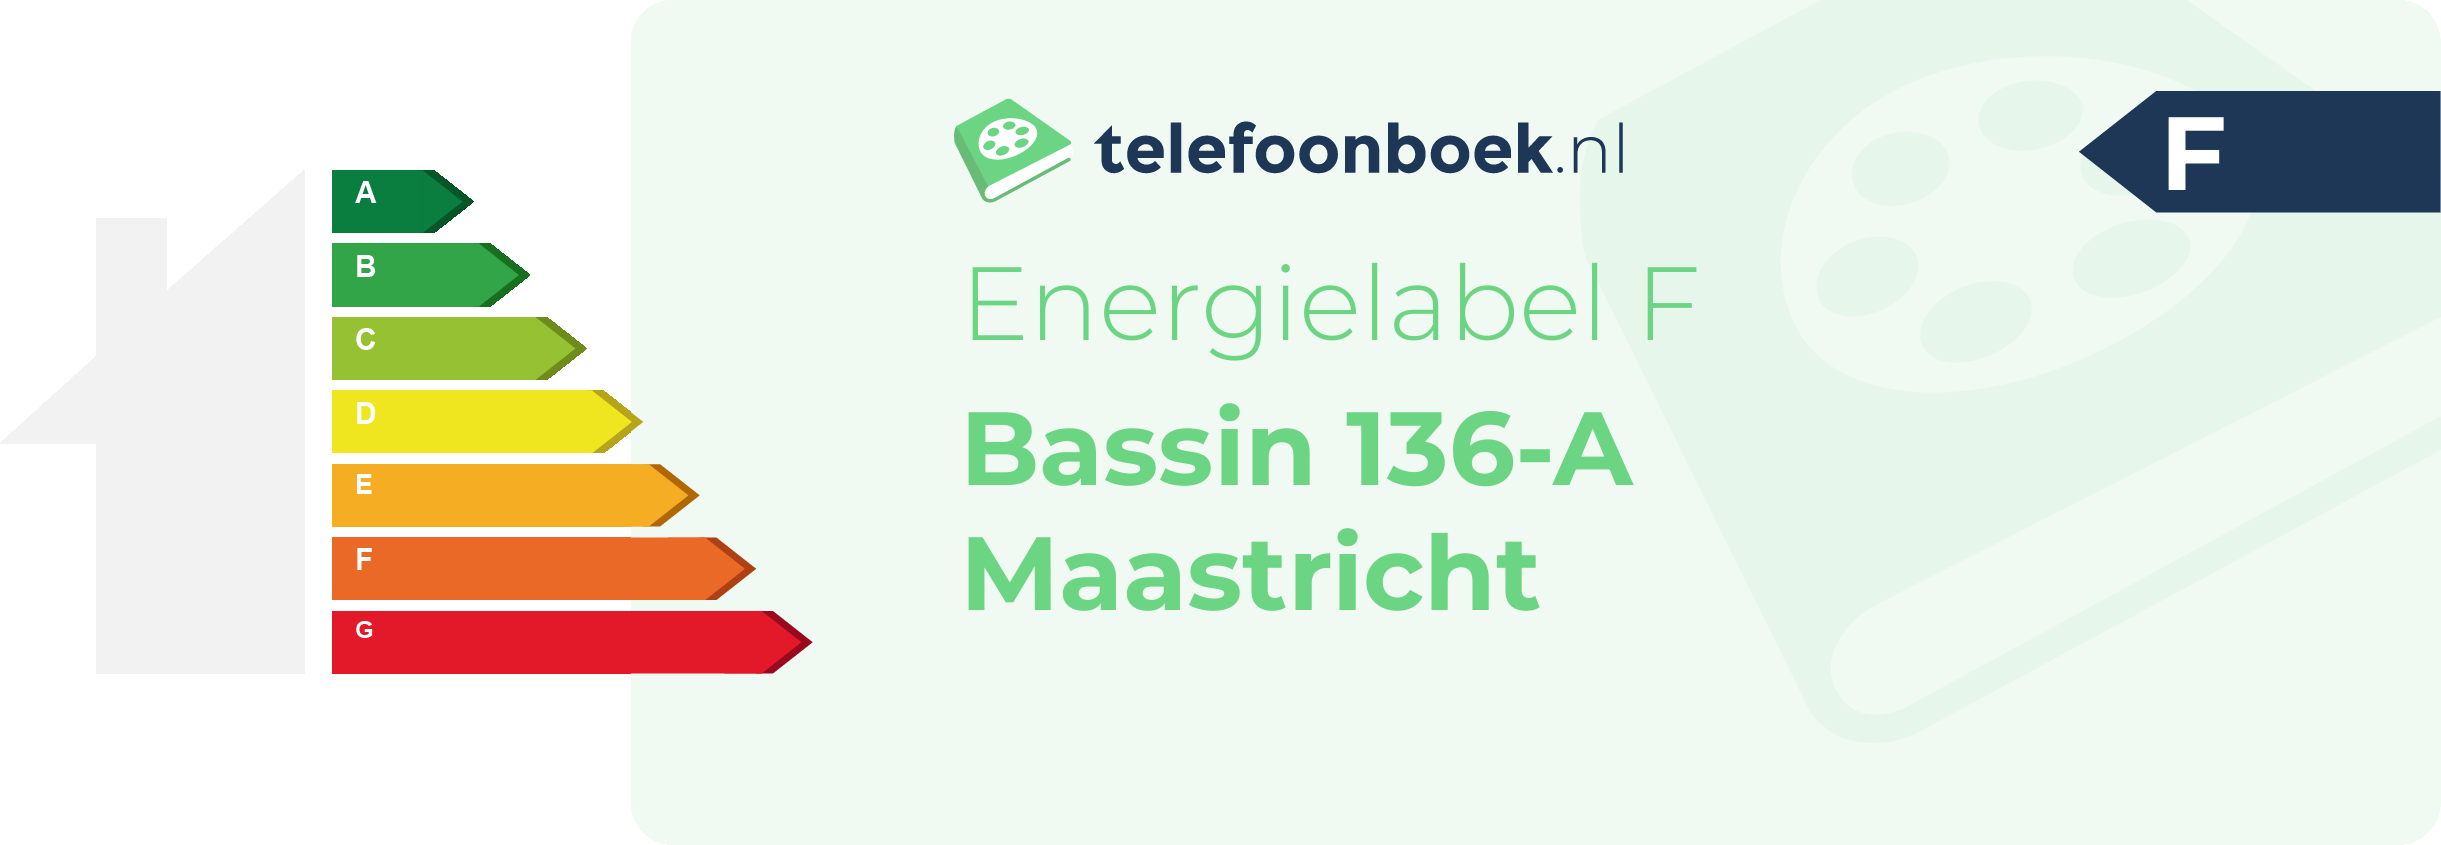 Energielabel Bassin 136-A Maastricht